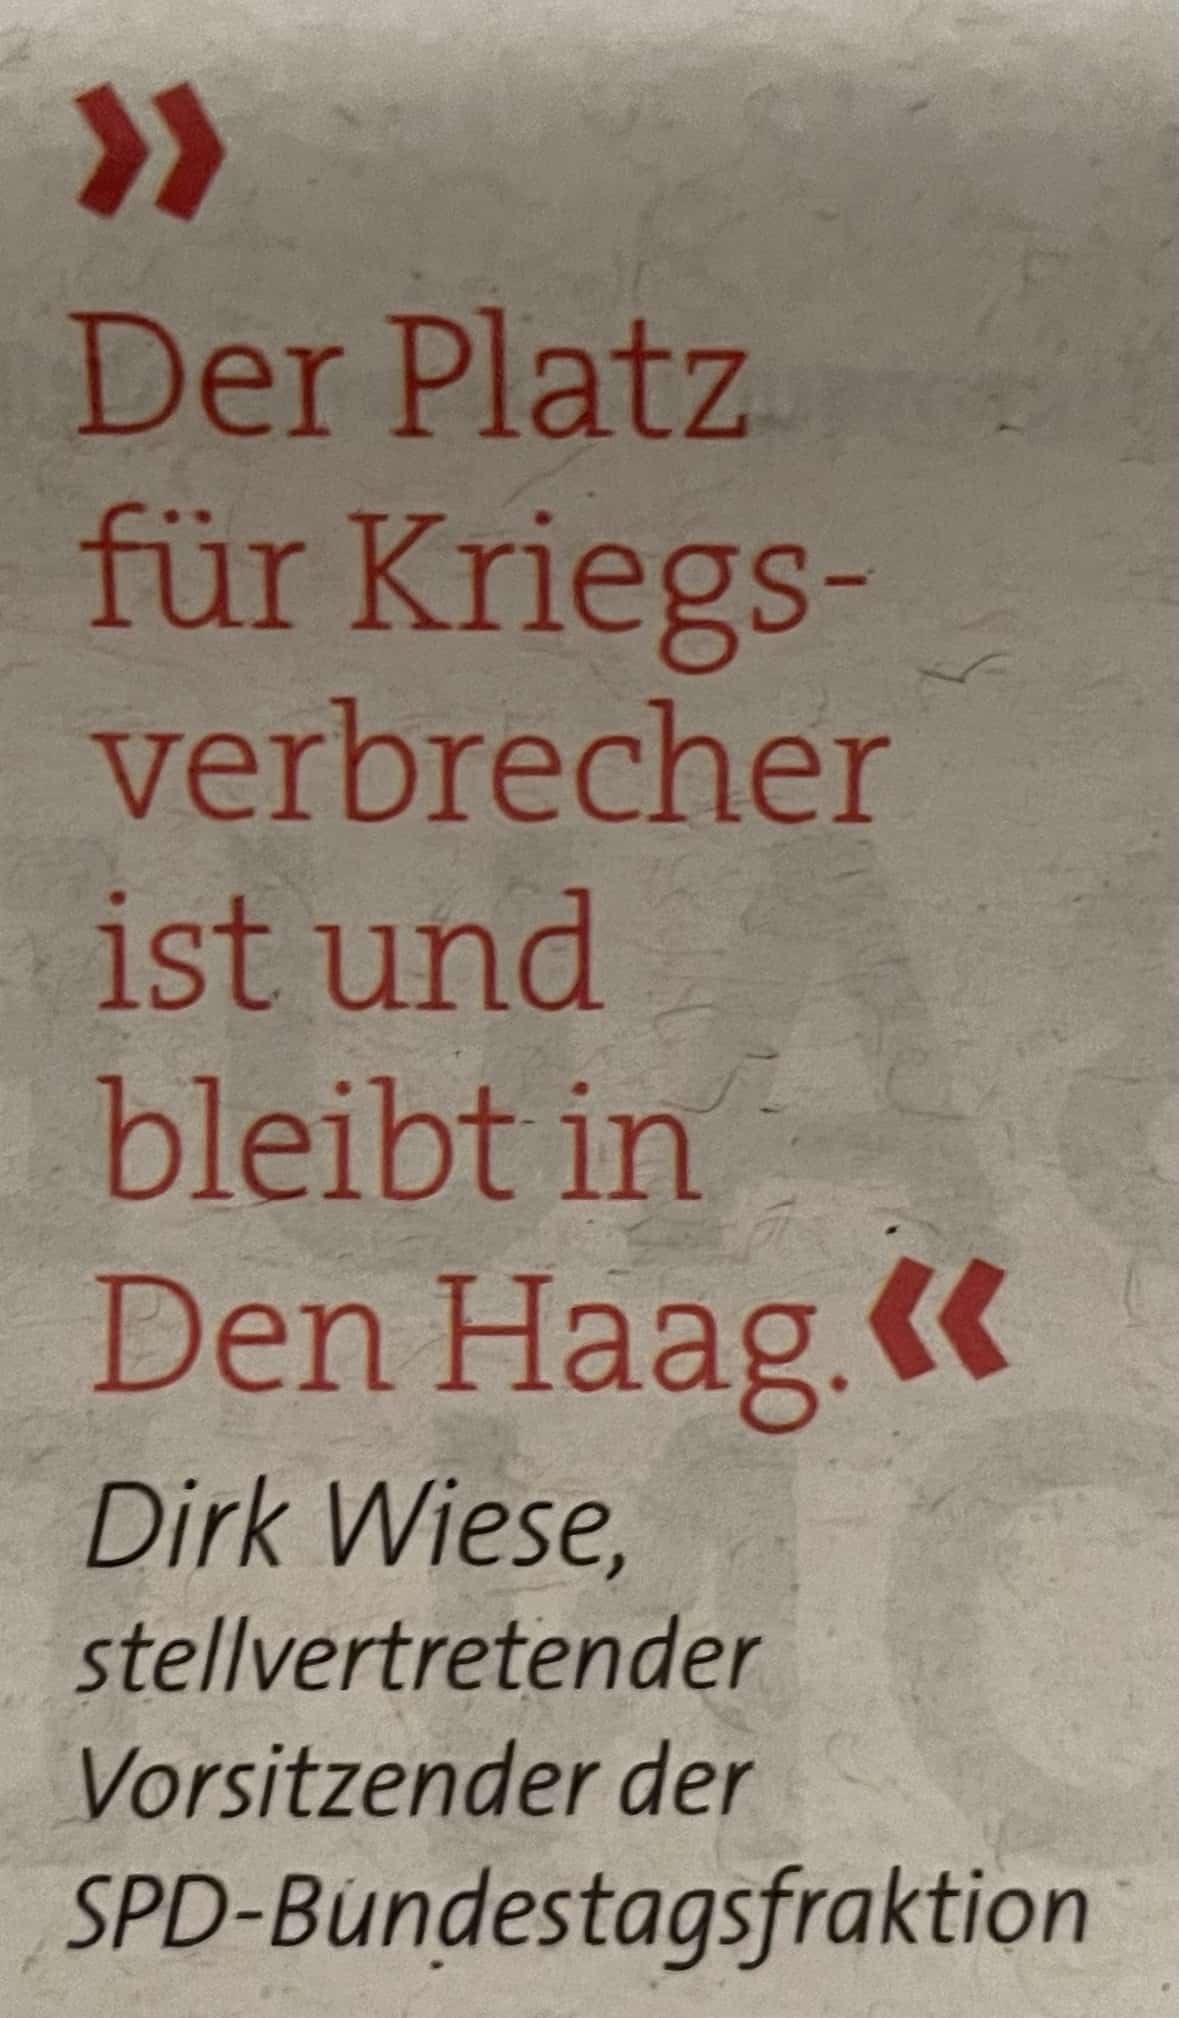 Dirk Wiese zu Kriegsverbrechern